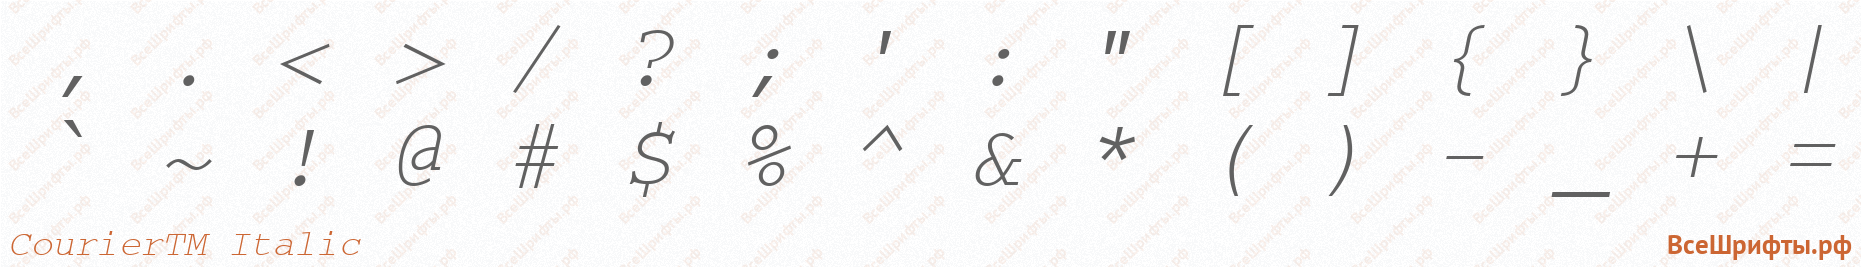 Шрифт CourierTM Italic со знаками препинания и пунктуации